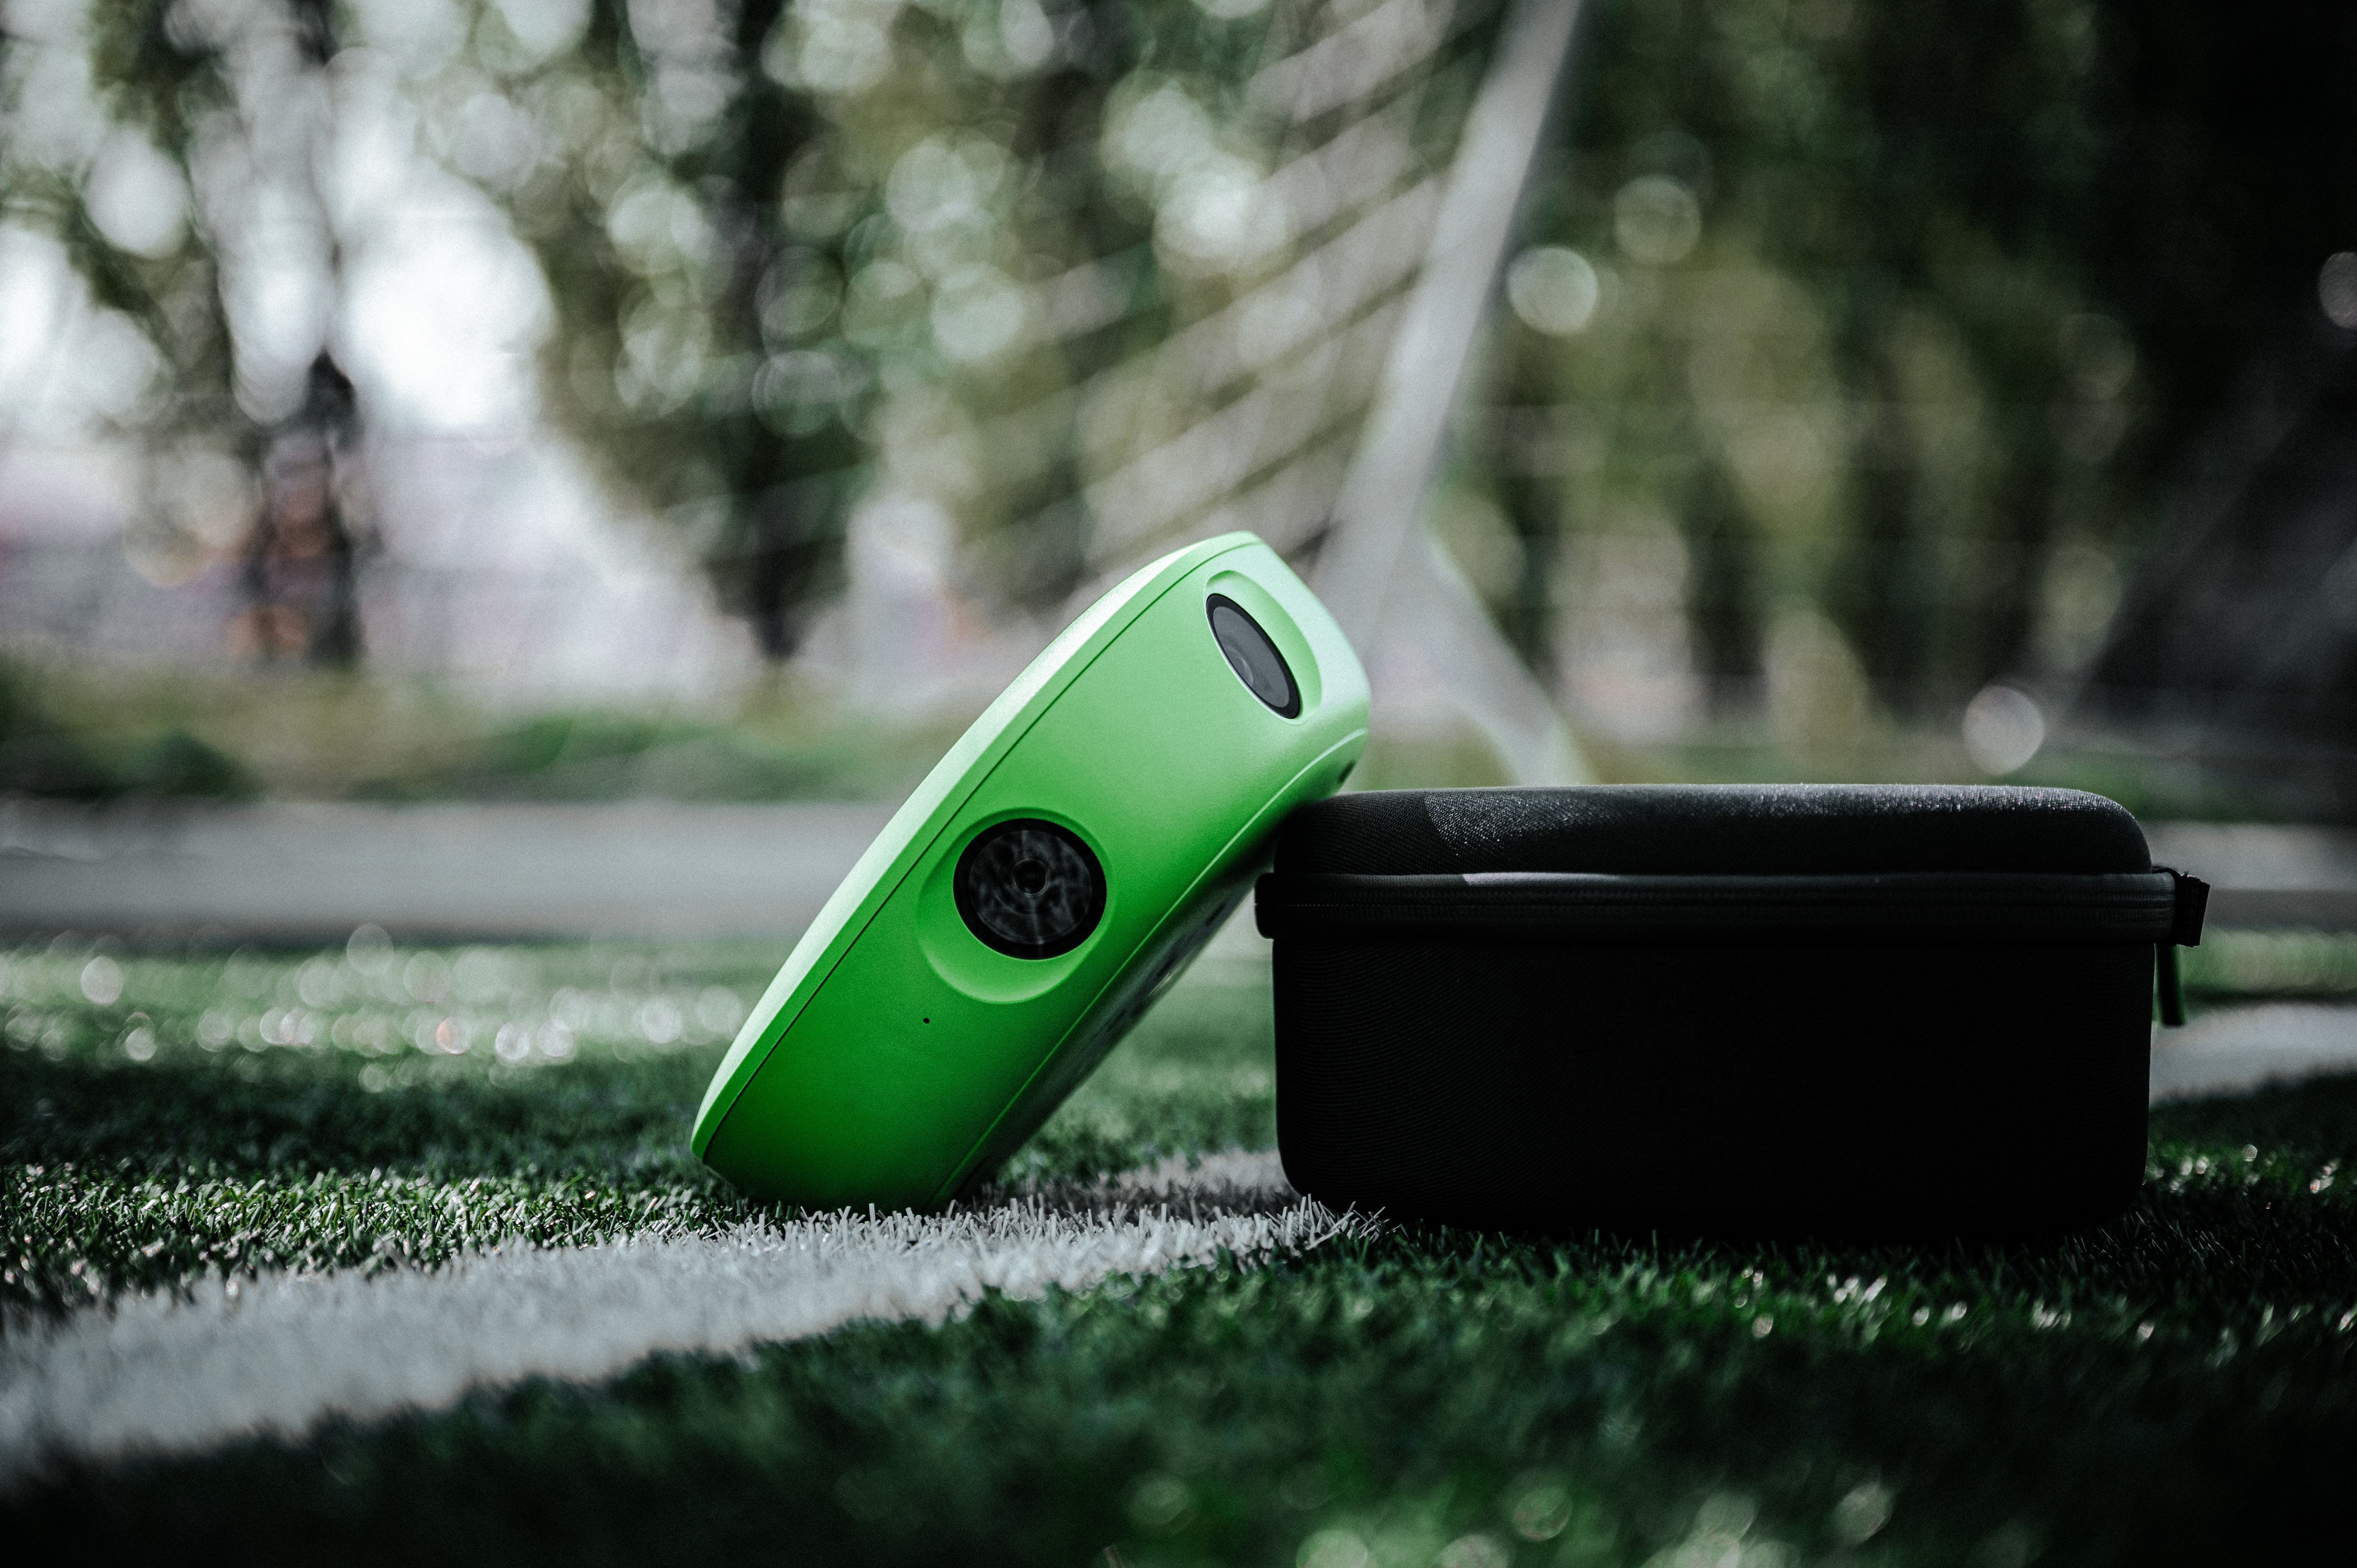 A Veo camera on a soccer field.